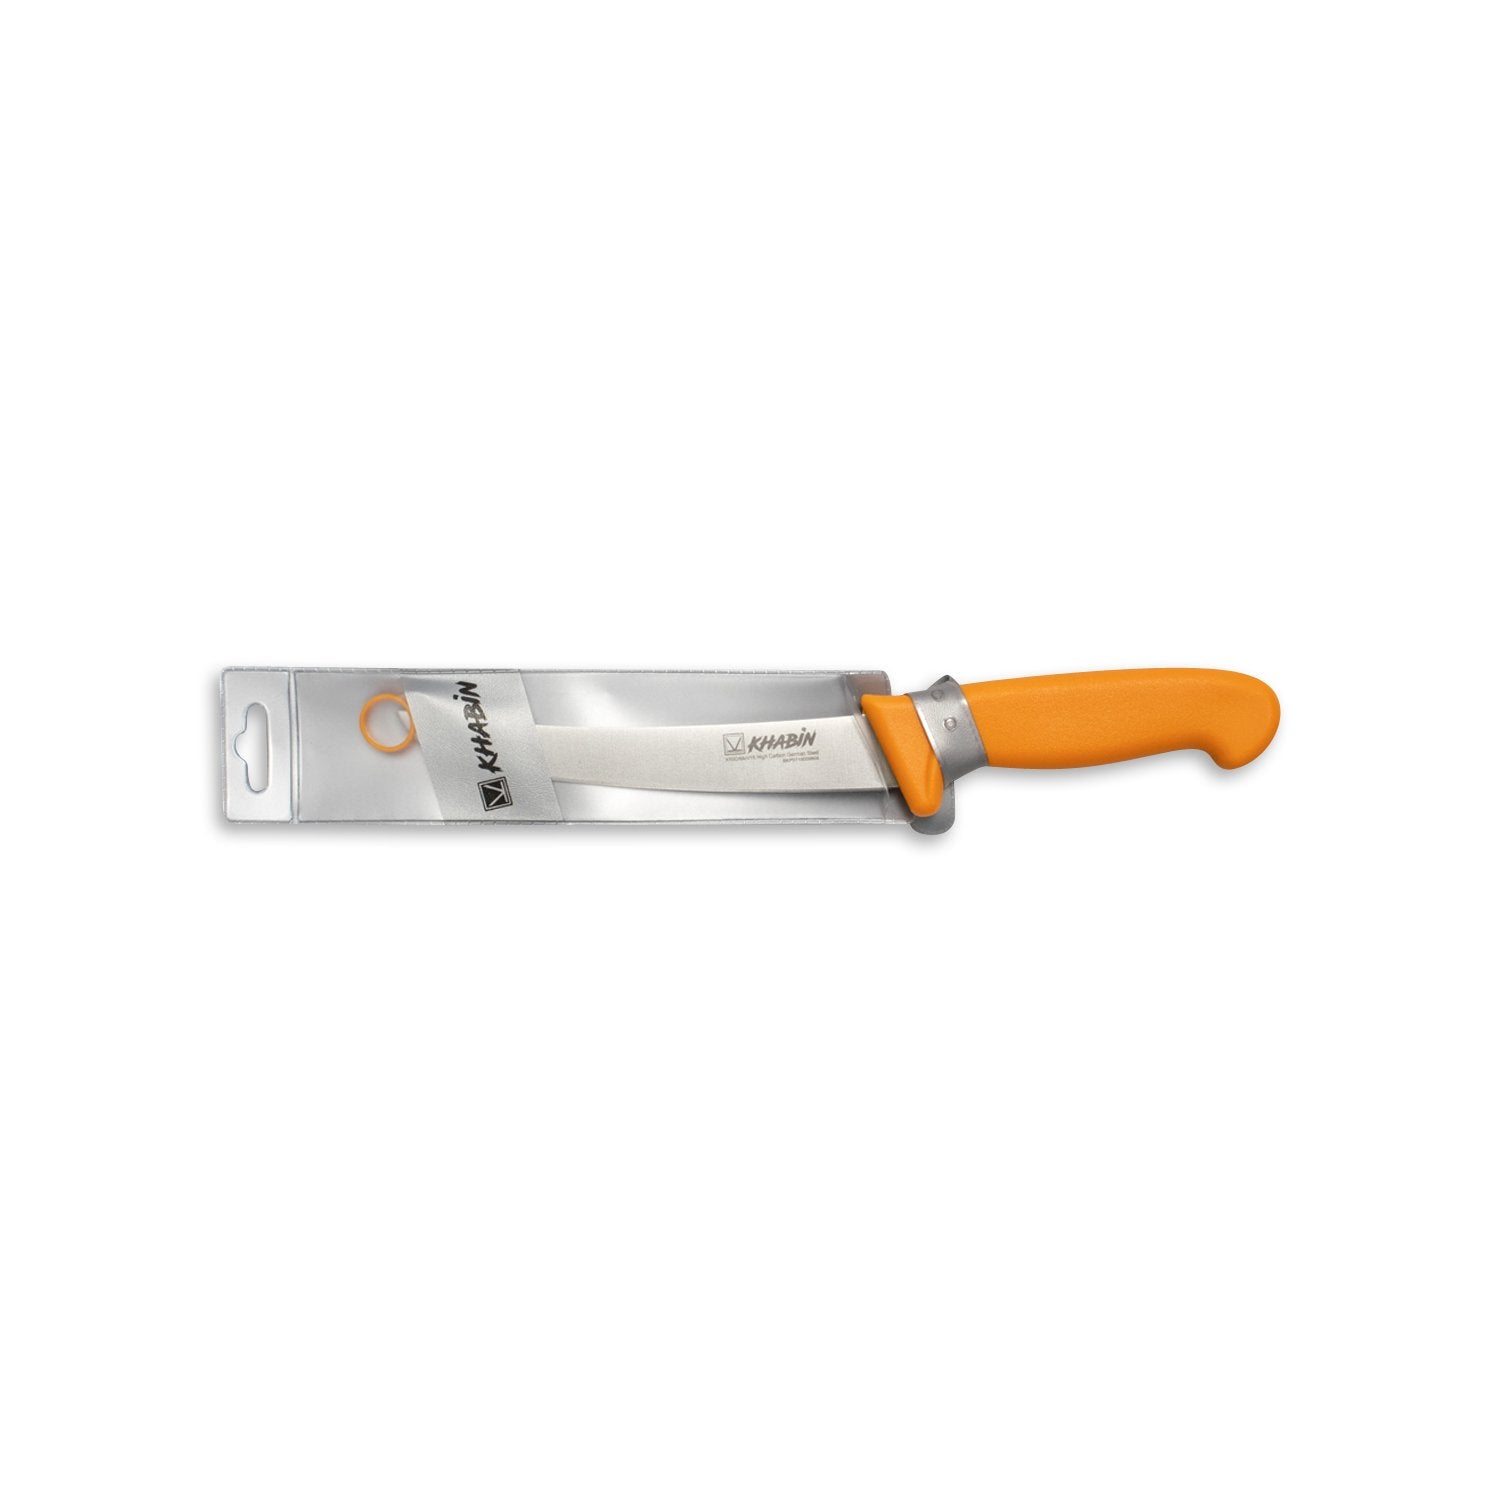 Khabin Khabin Knife Boning Wide Curved Orange 6inch Kitchen Equipment  